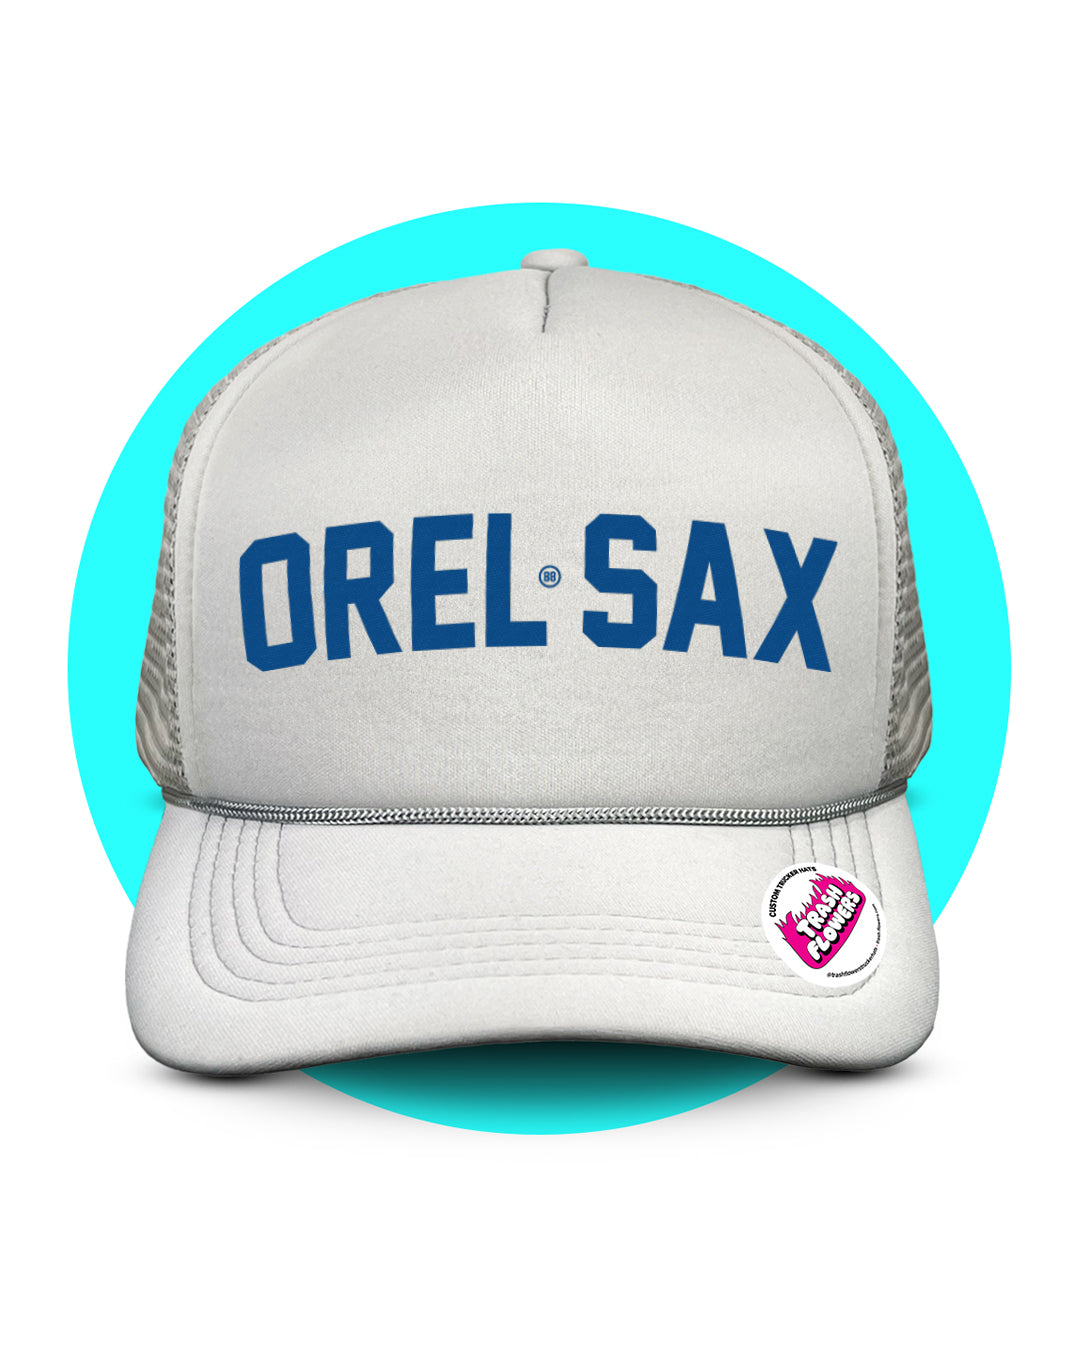 Orel Sax Dodgers 88 Trucker Hat